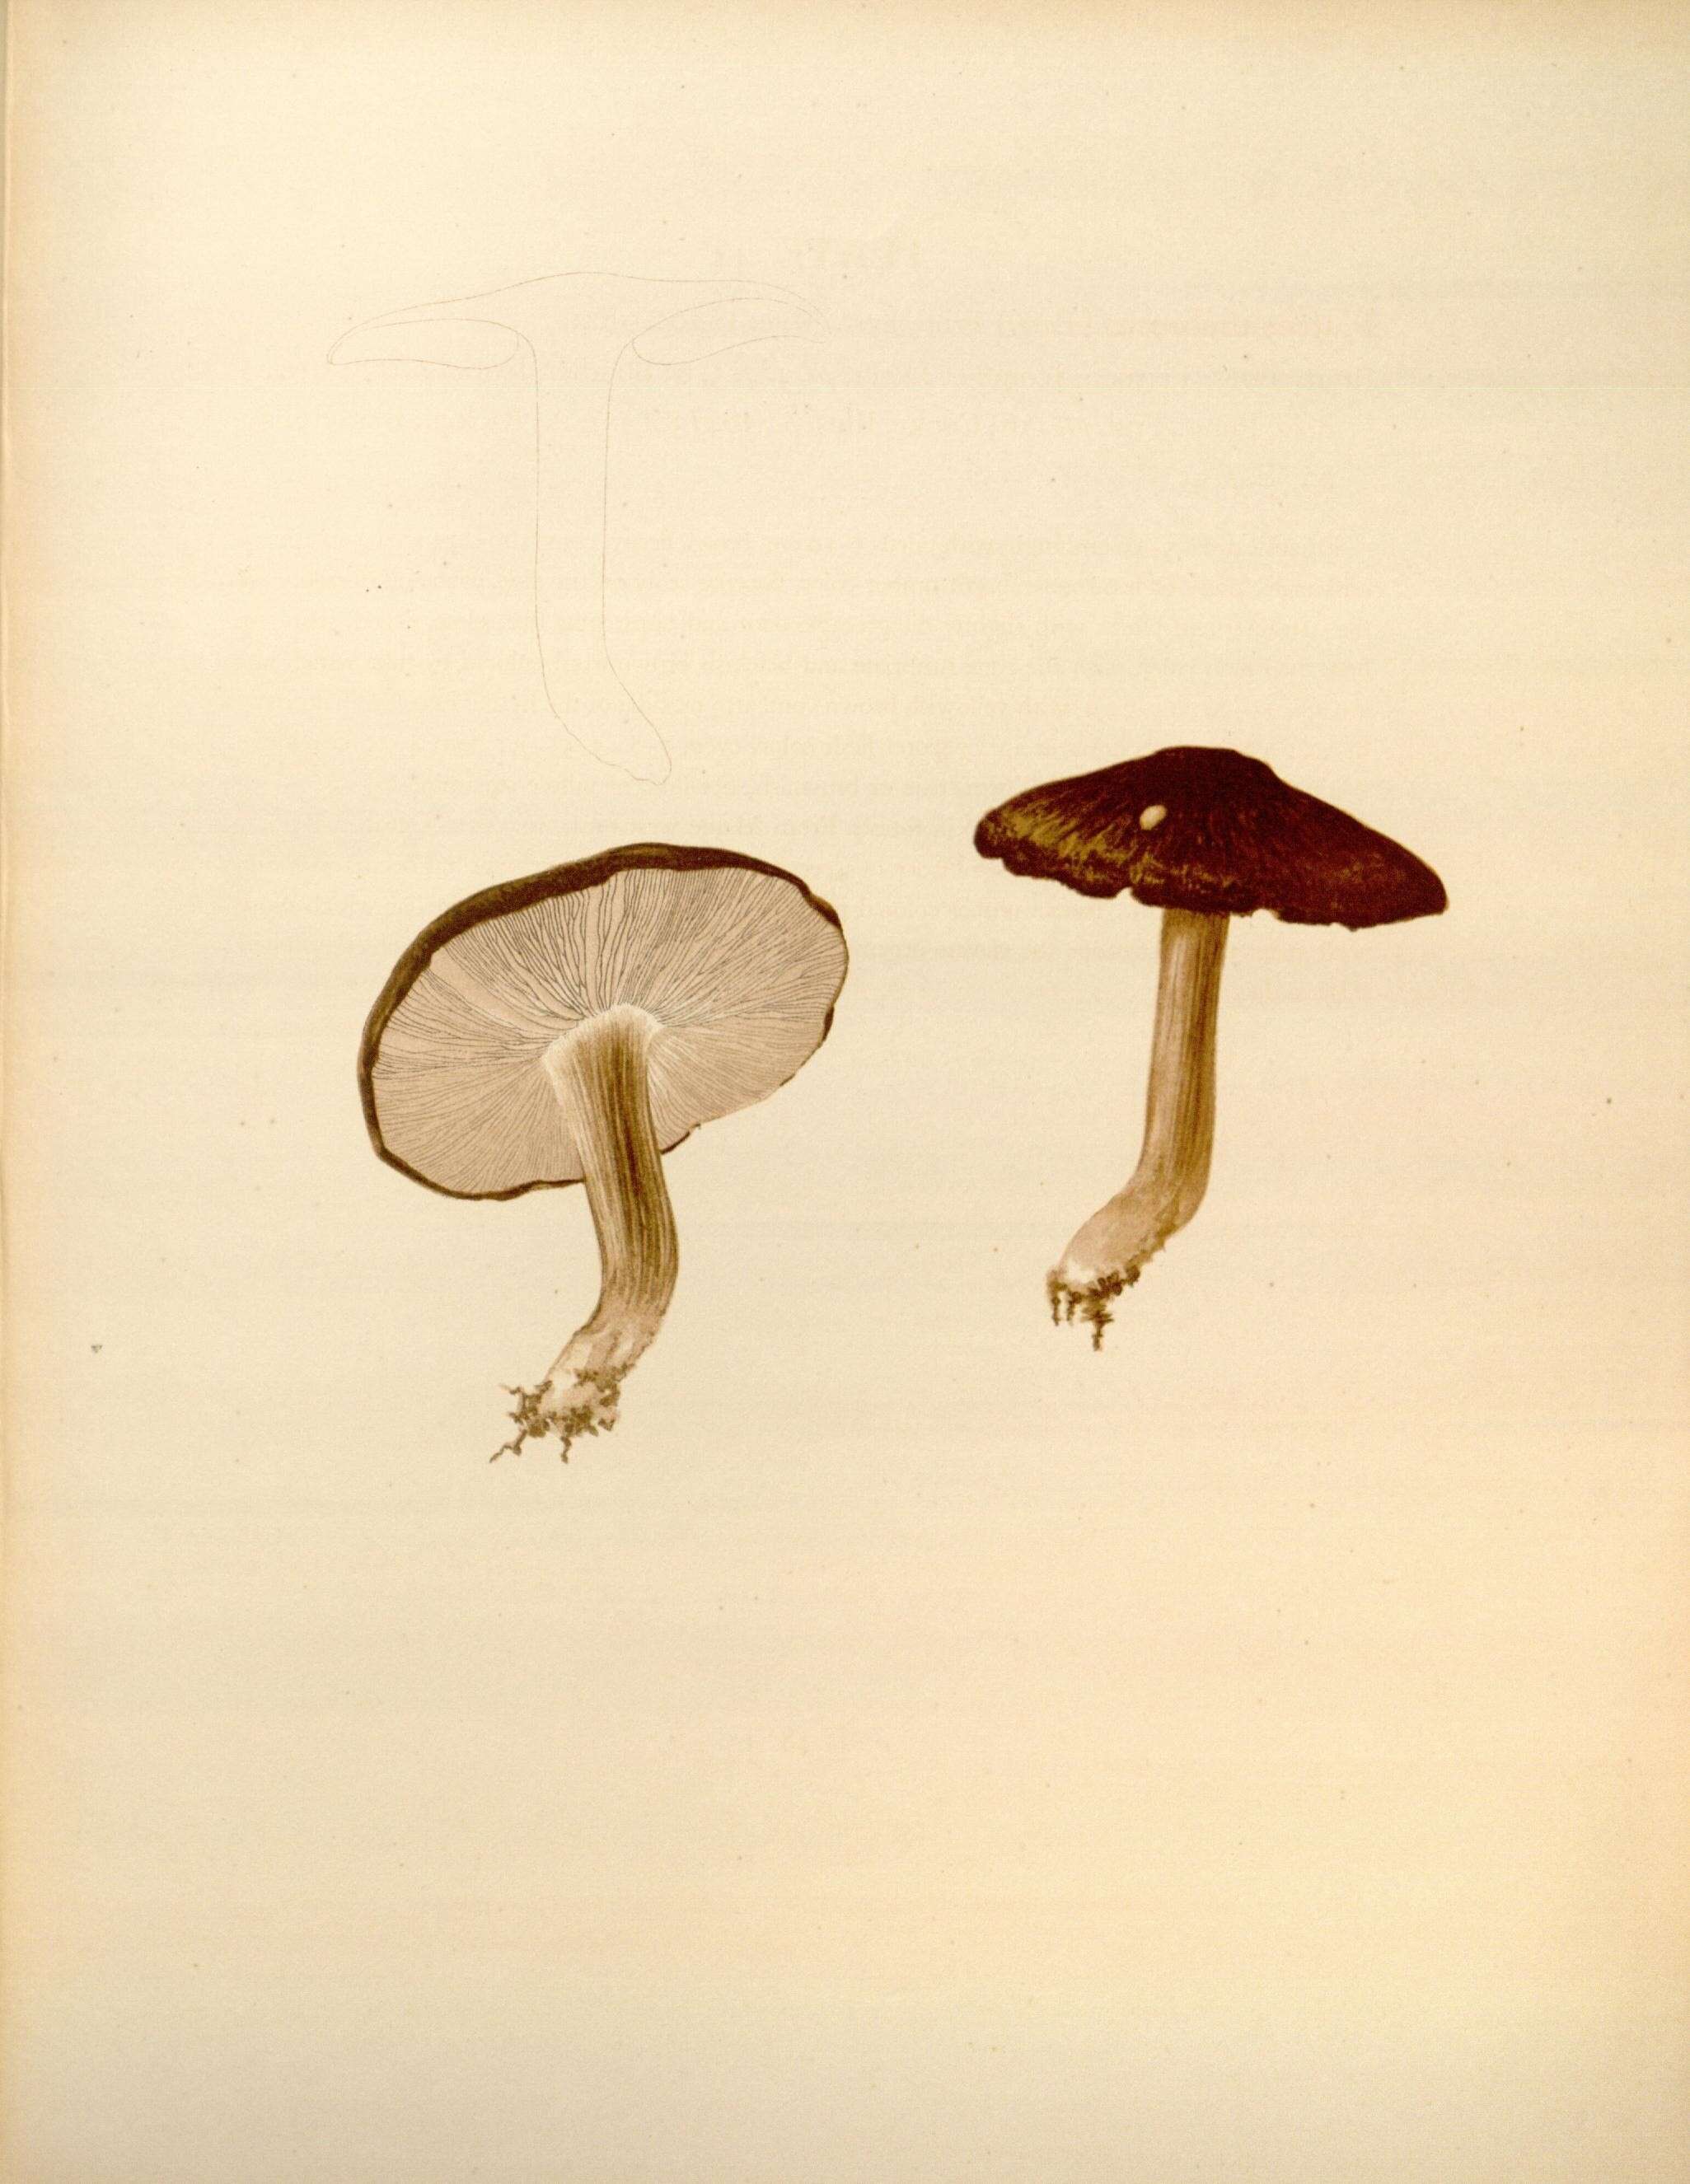 Image of Pluteus umbrosus (Pers.) P. Kumm. 1871